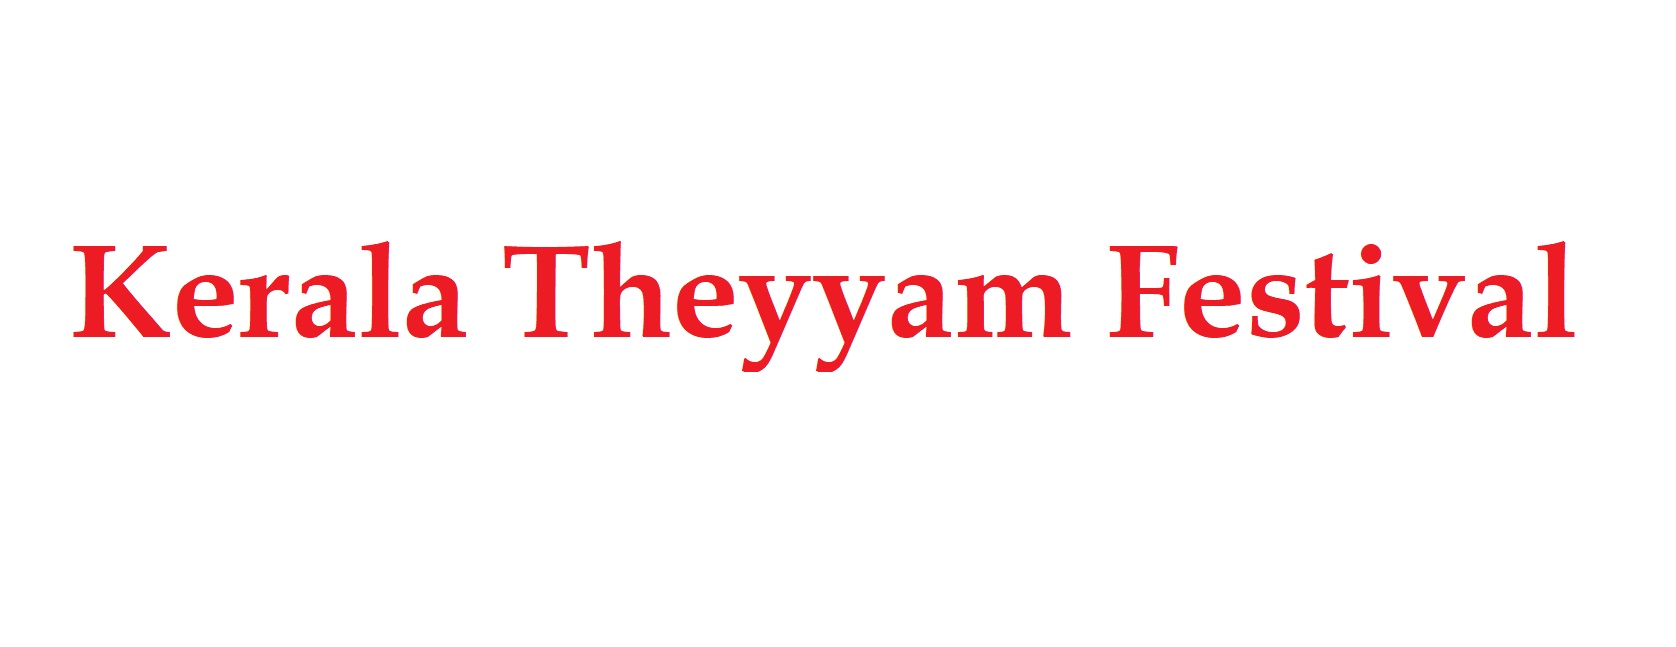 Theyyam Festival Tour, Kerala